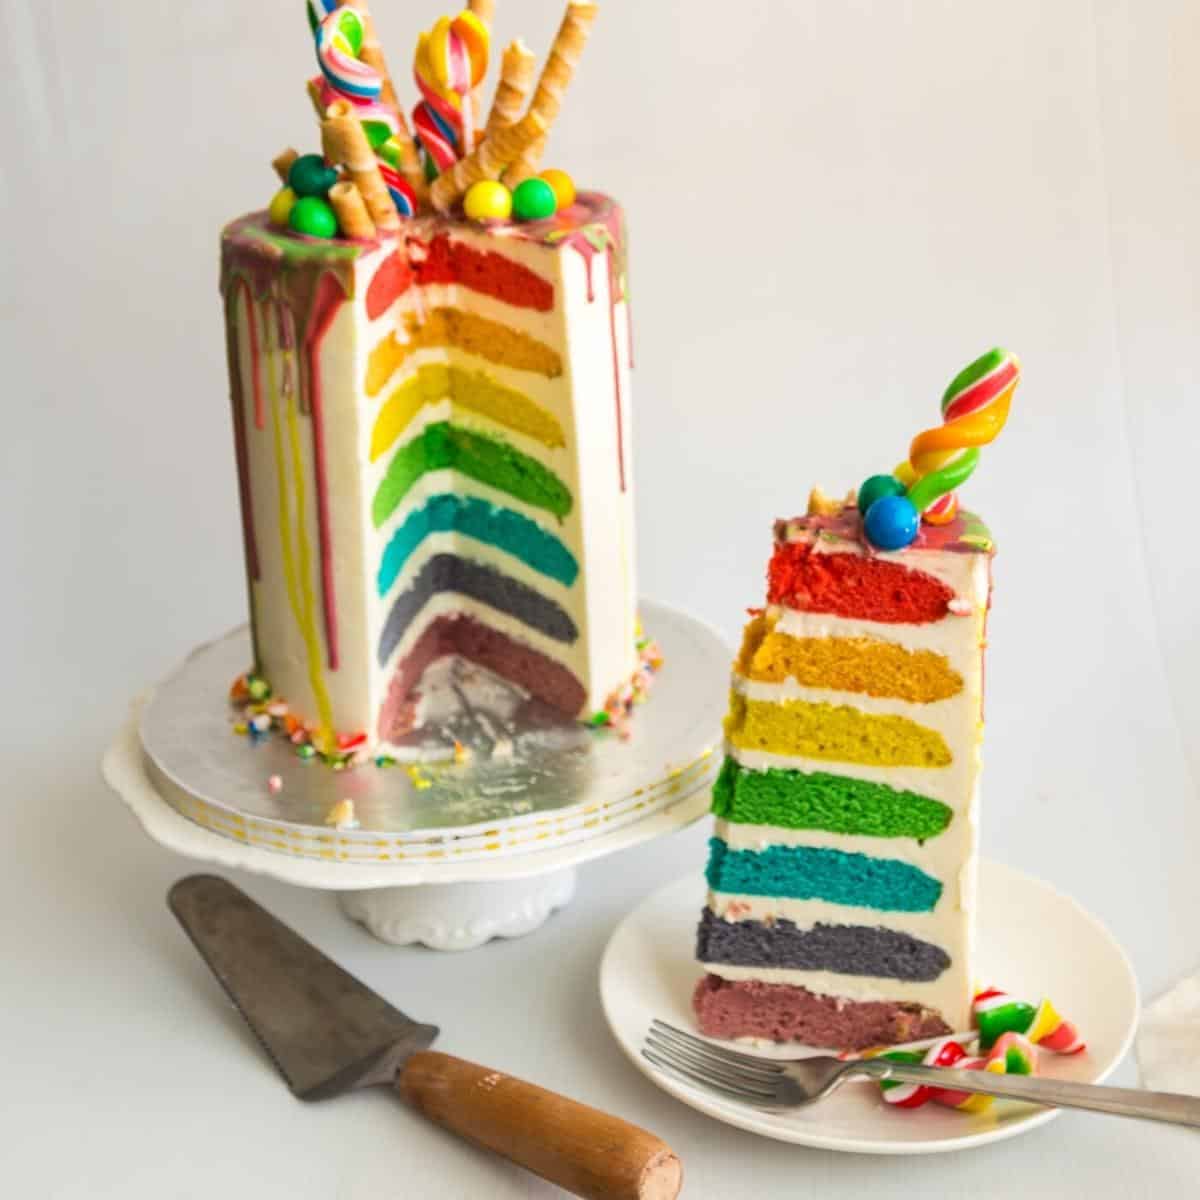 Easy Rainbow Cake – Seven Layers